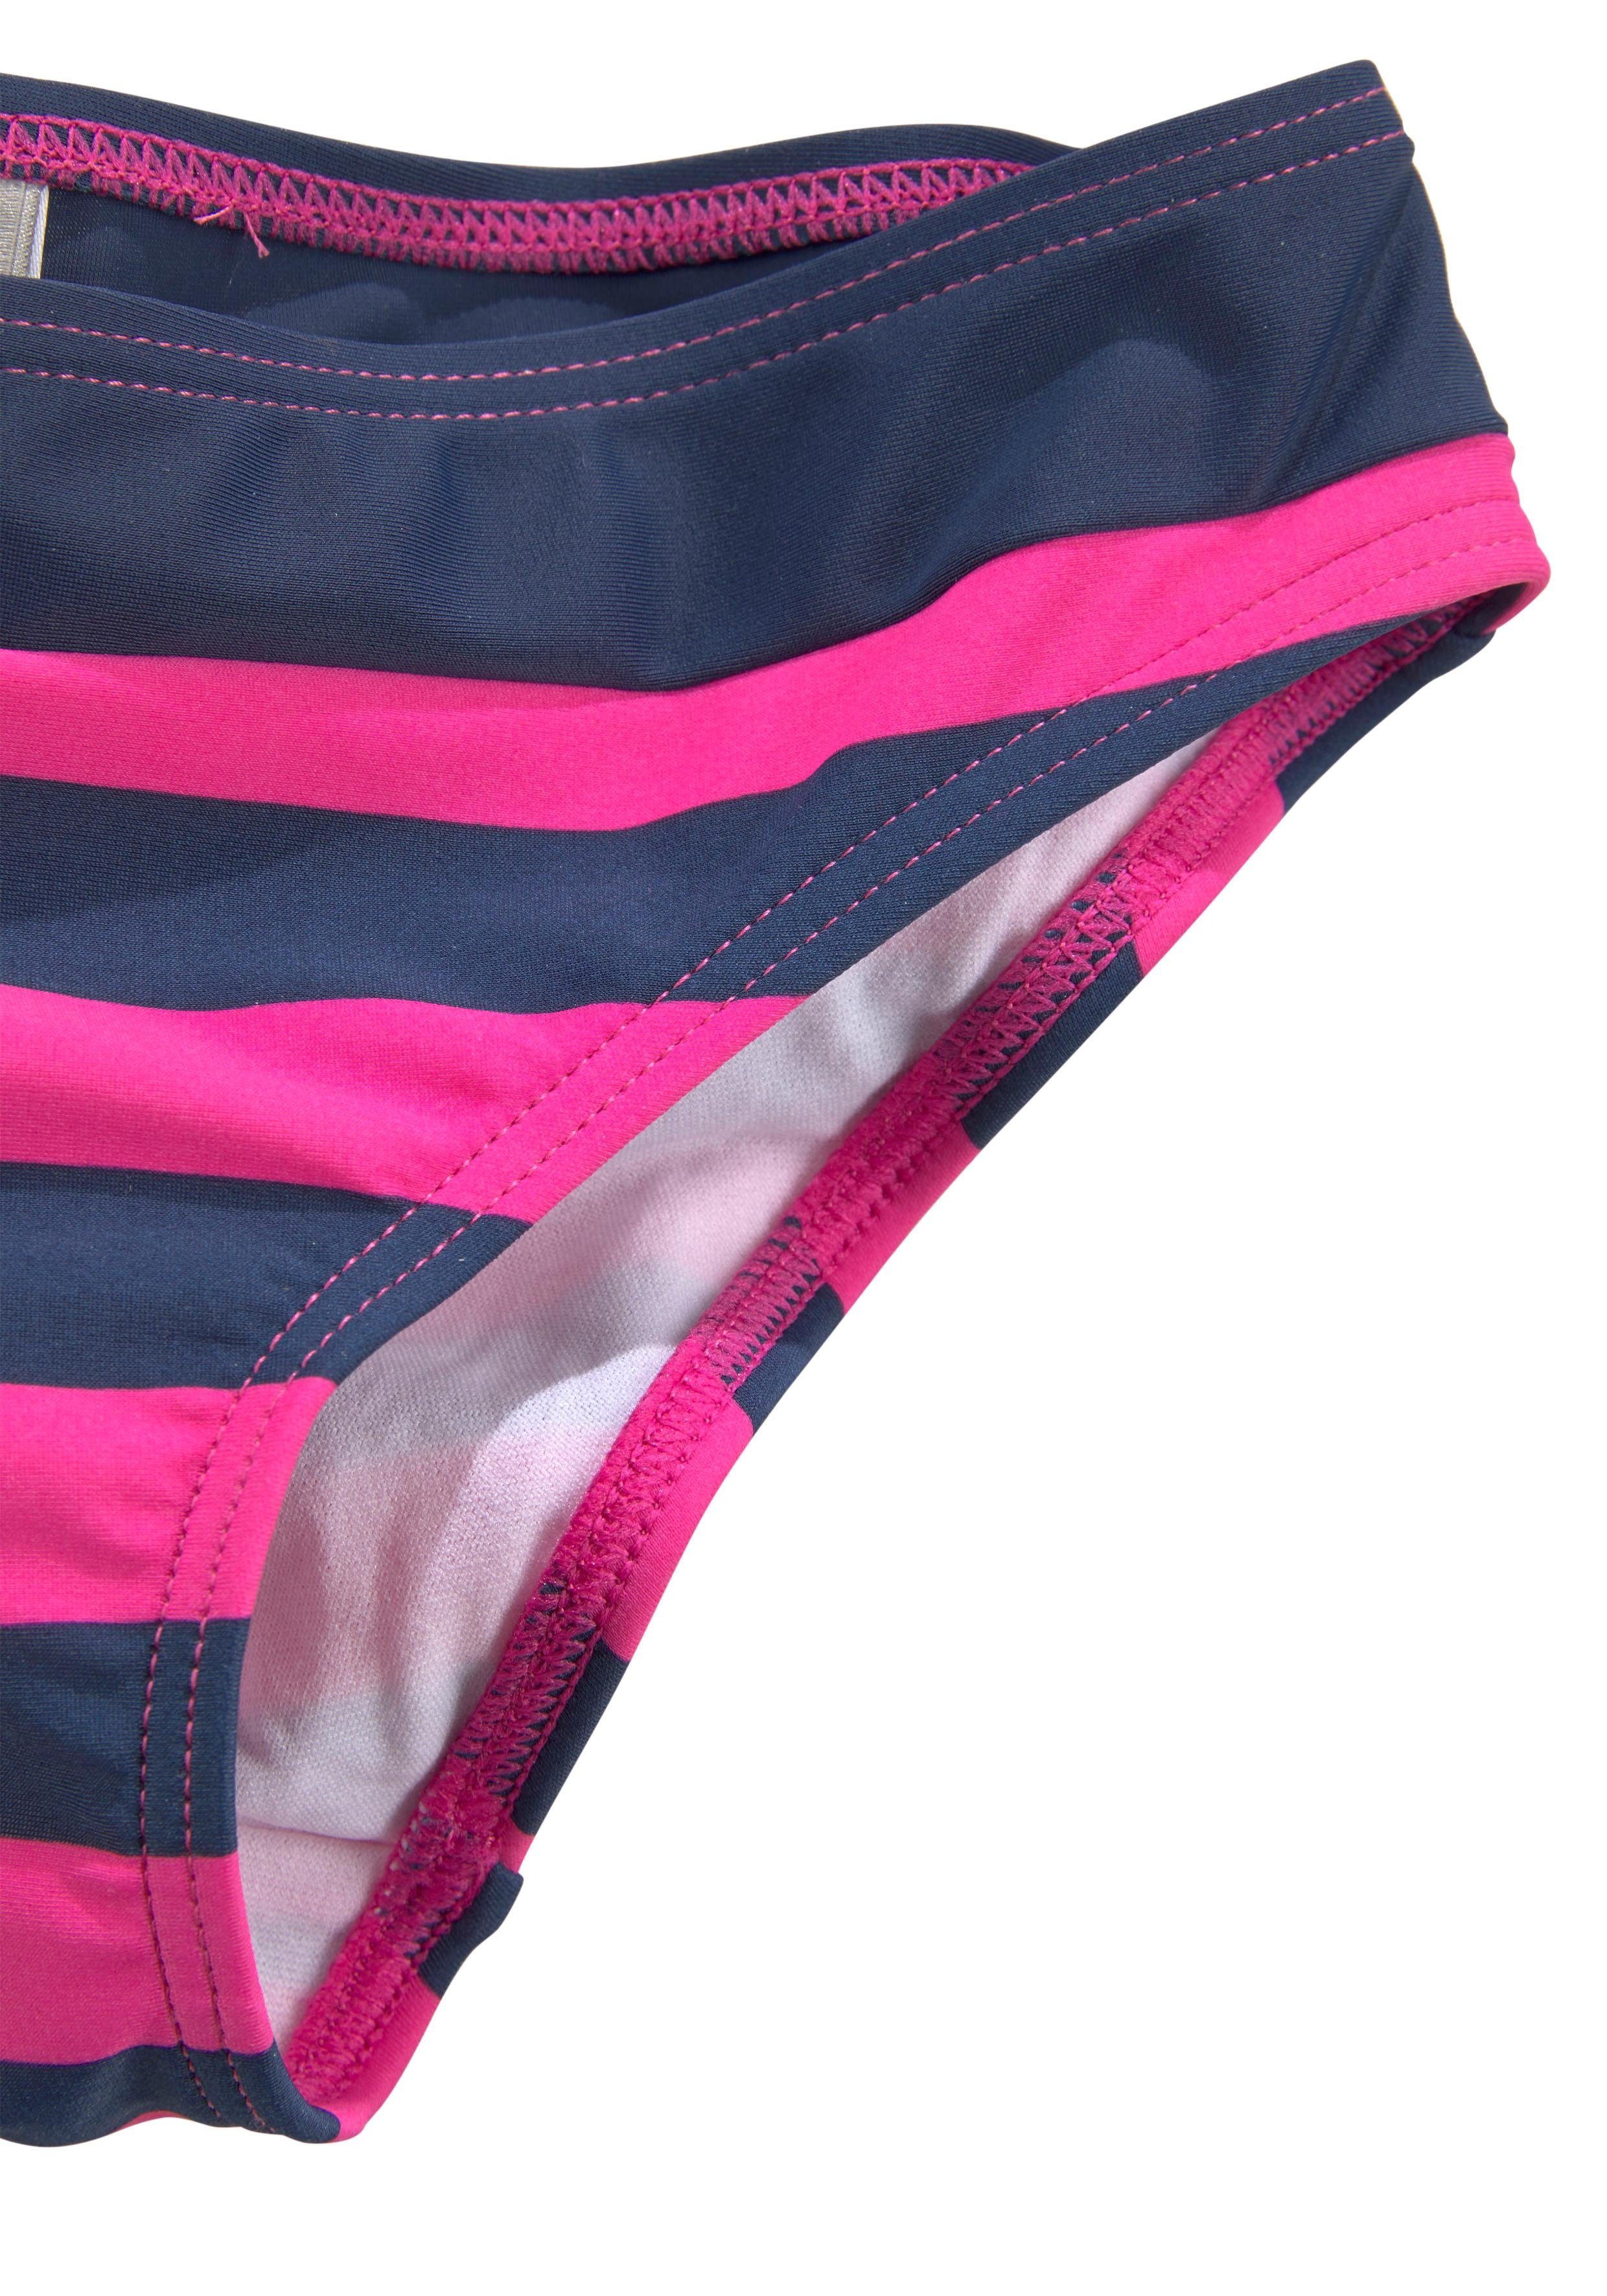 Bench. Bandeau-Bikini mit großem pink-marine Logoprint